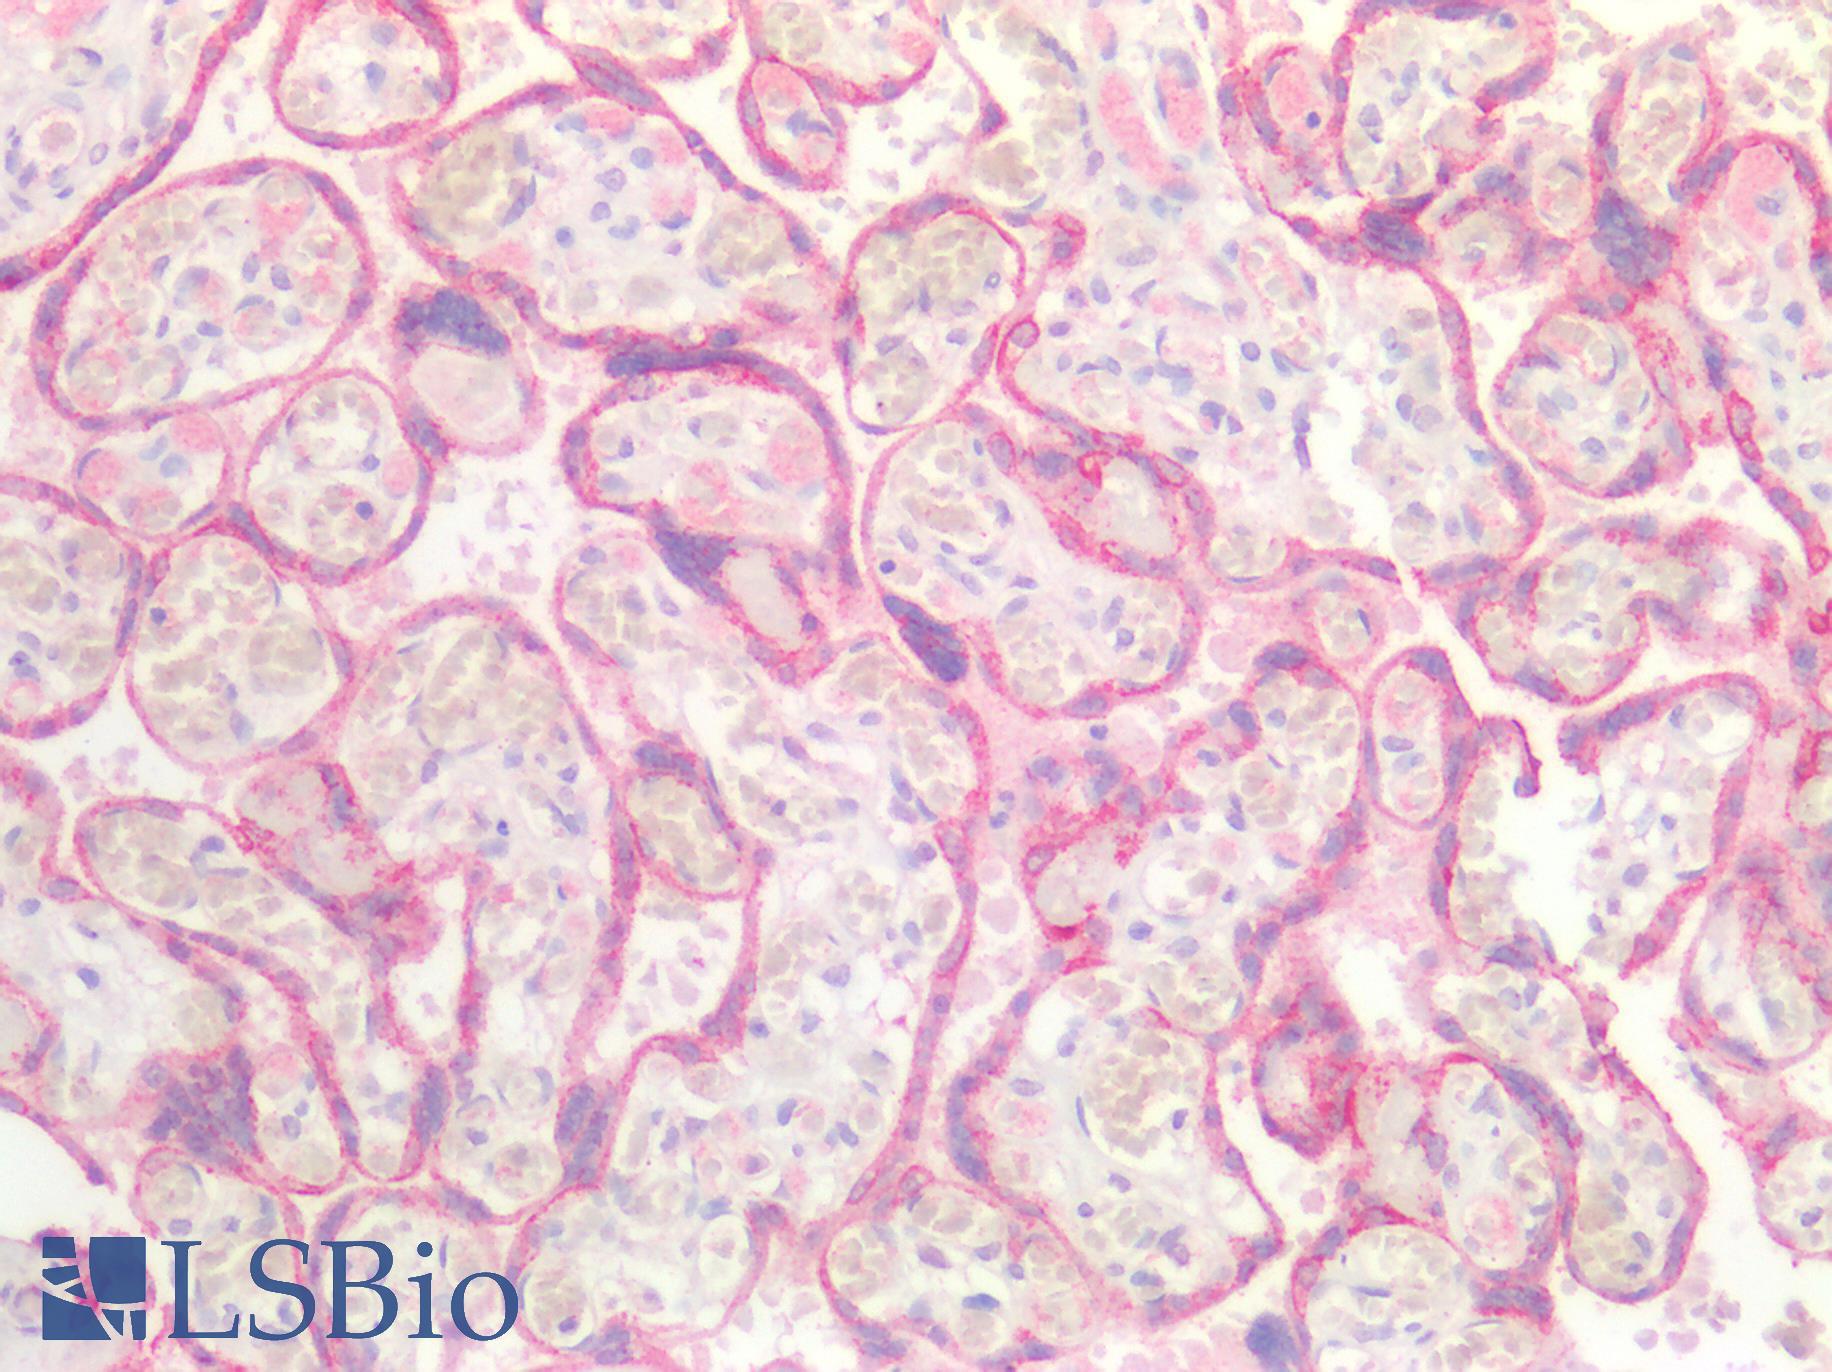 FOLR1 / Folate Receptor Alpha Antibody - Human Placenta: Formalin-Fixed, Paraffin-Embedded (FFPE)